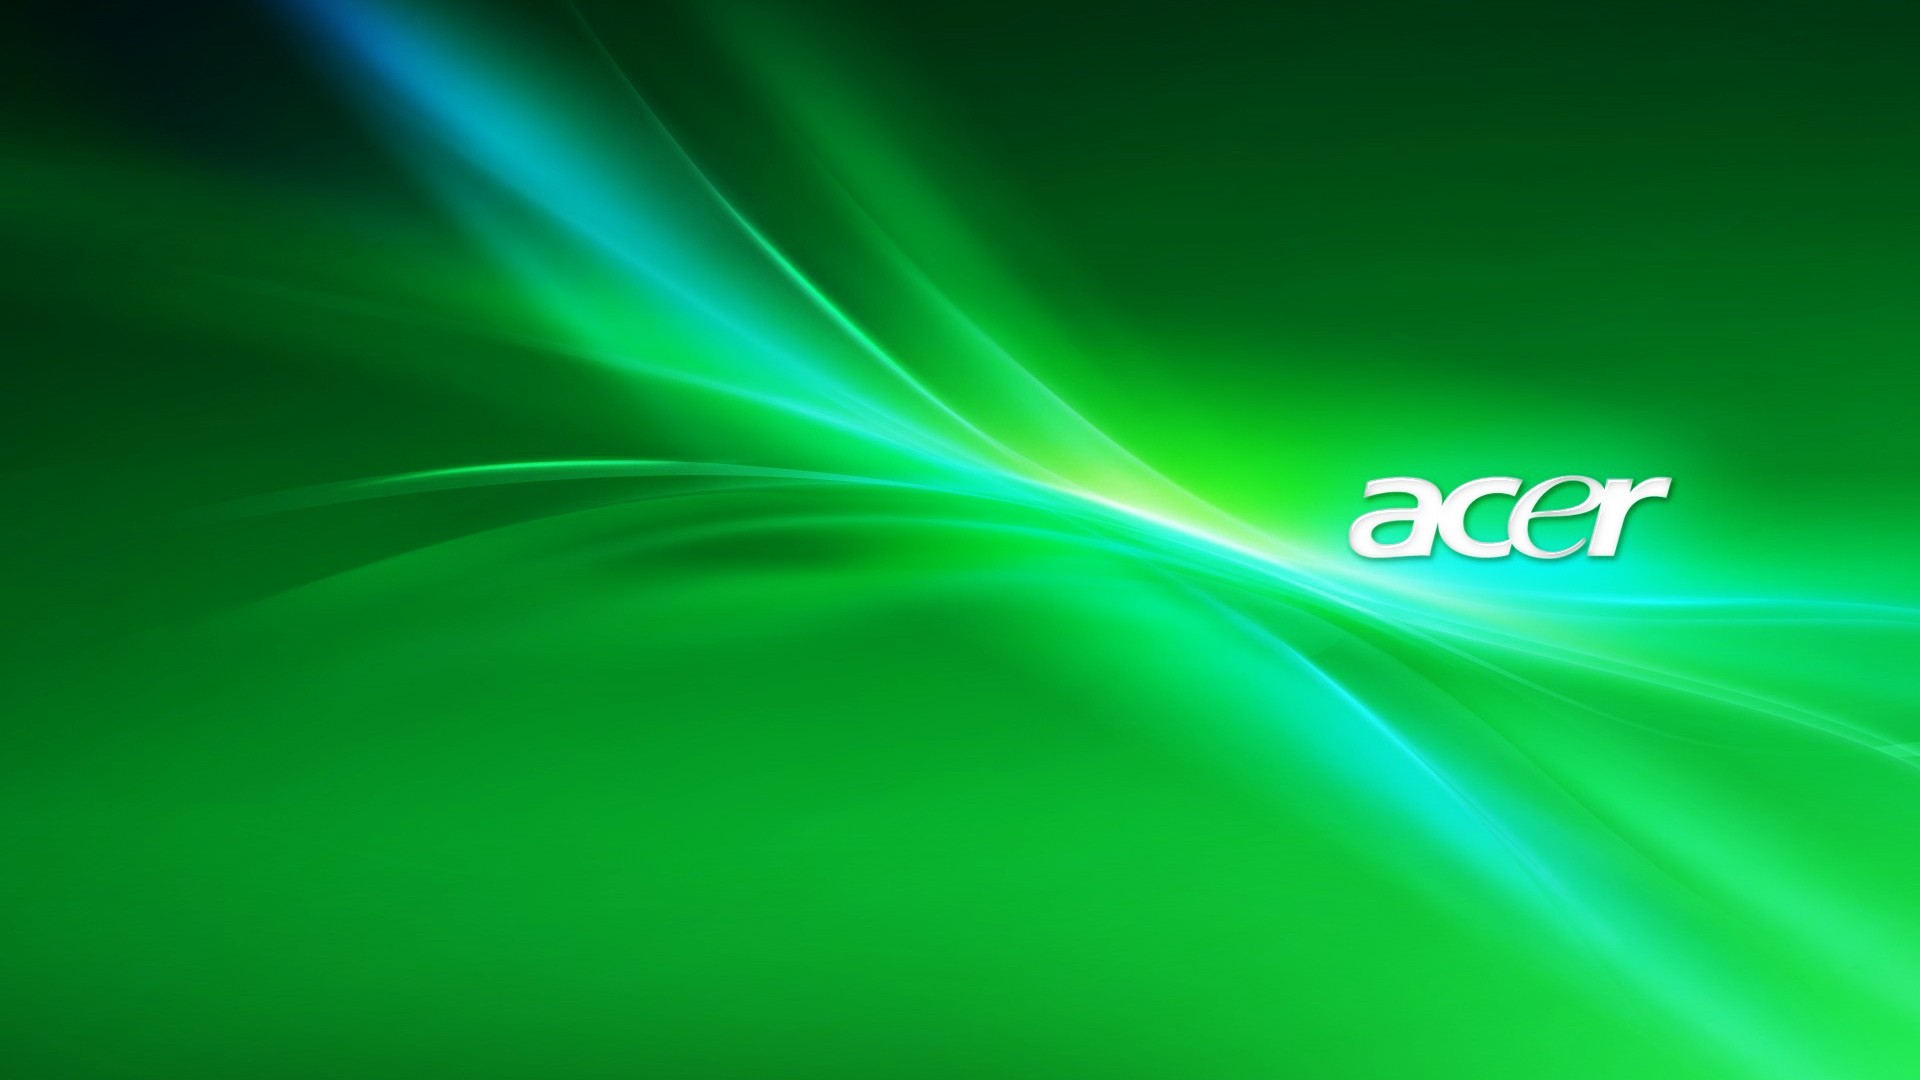 Acer Wallpaper 1080p HD 1920x1080